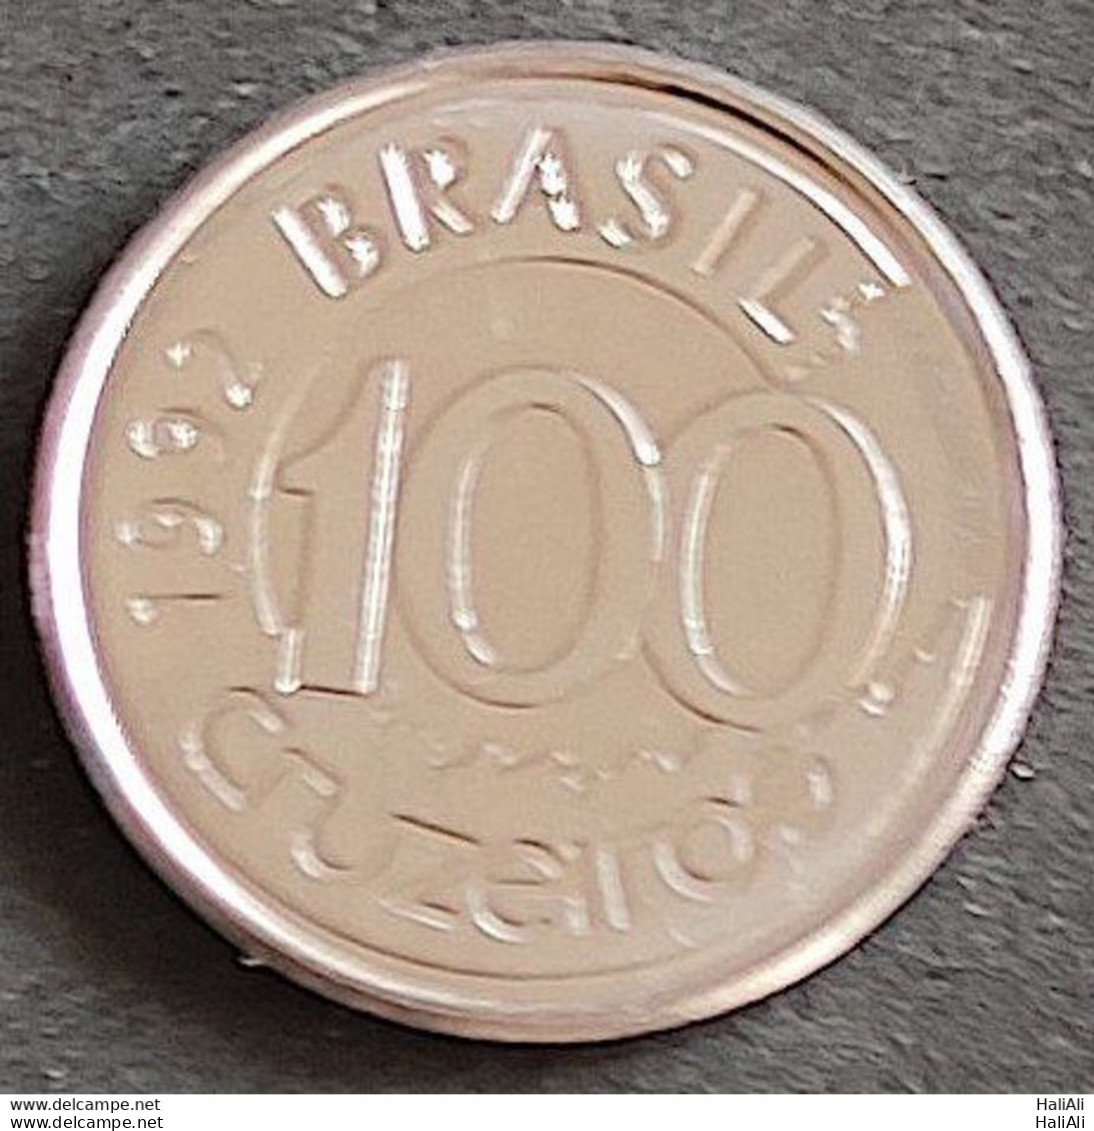 Coin Brazil Moeda Brasil 1992 100 Cruzeiros 1 - Brazil